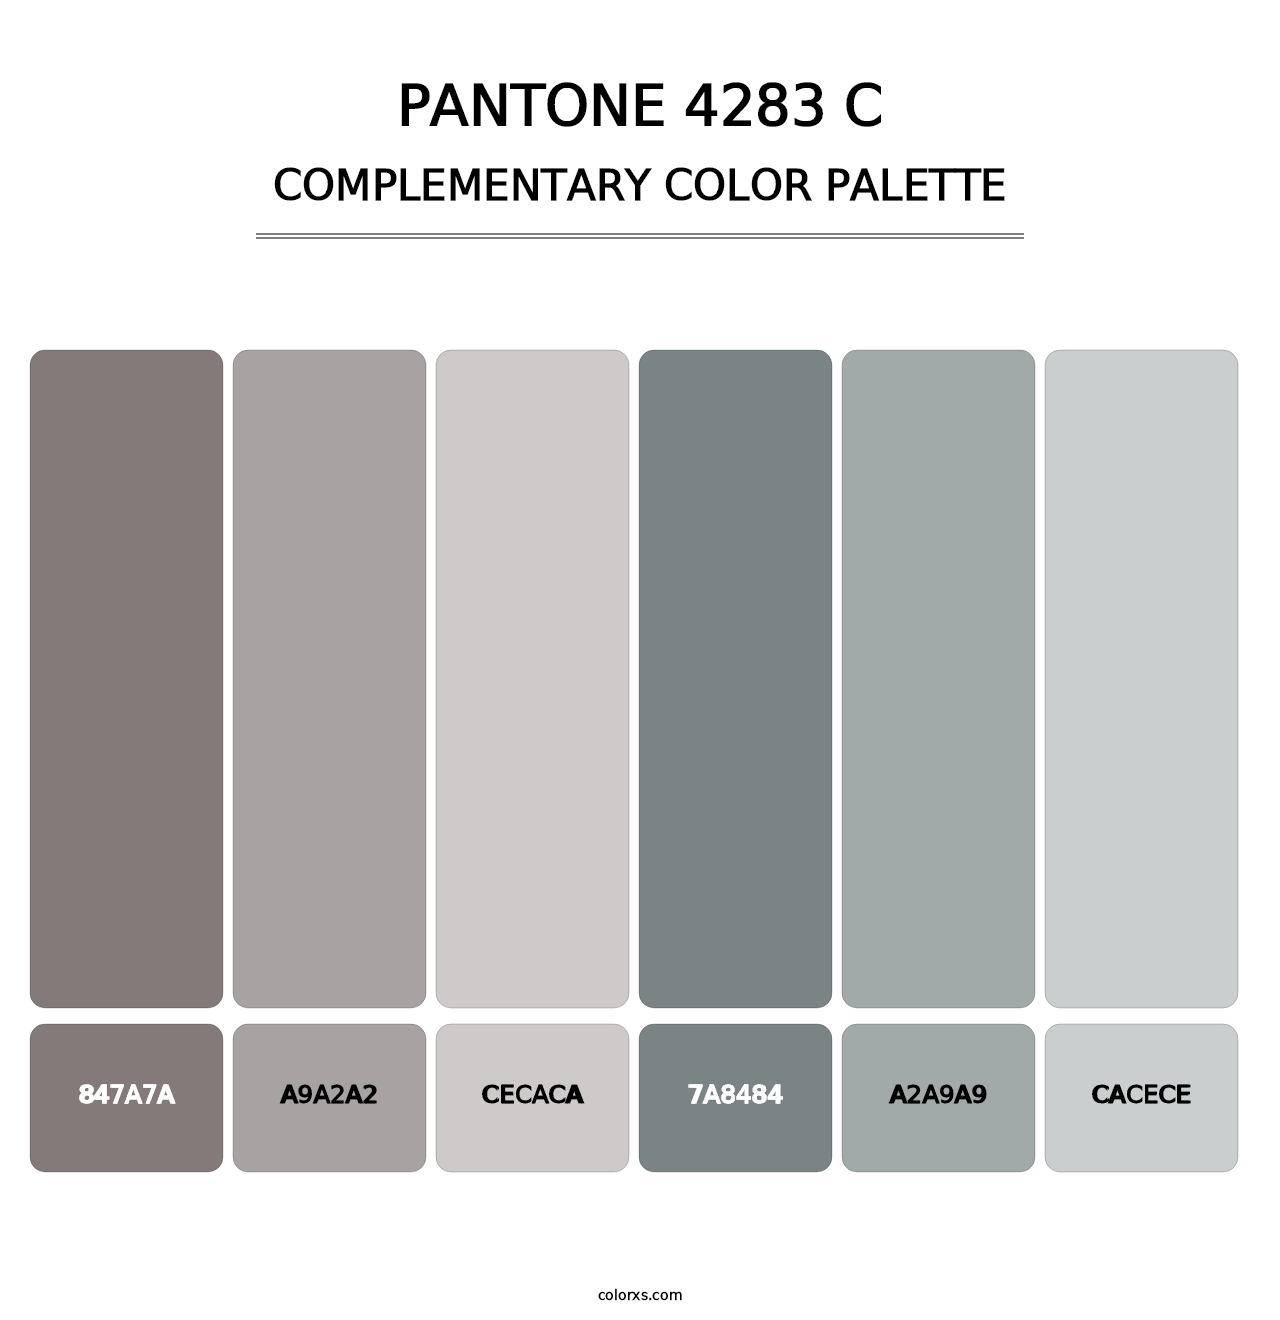 PANTONE 4283 C - Complementary Color Palette